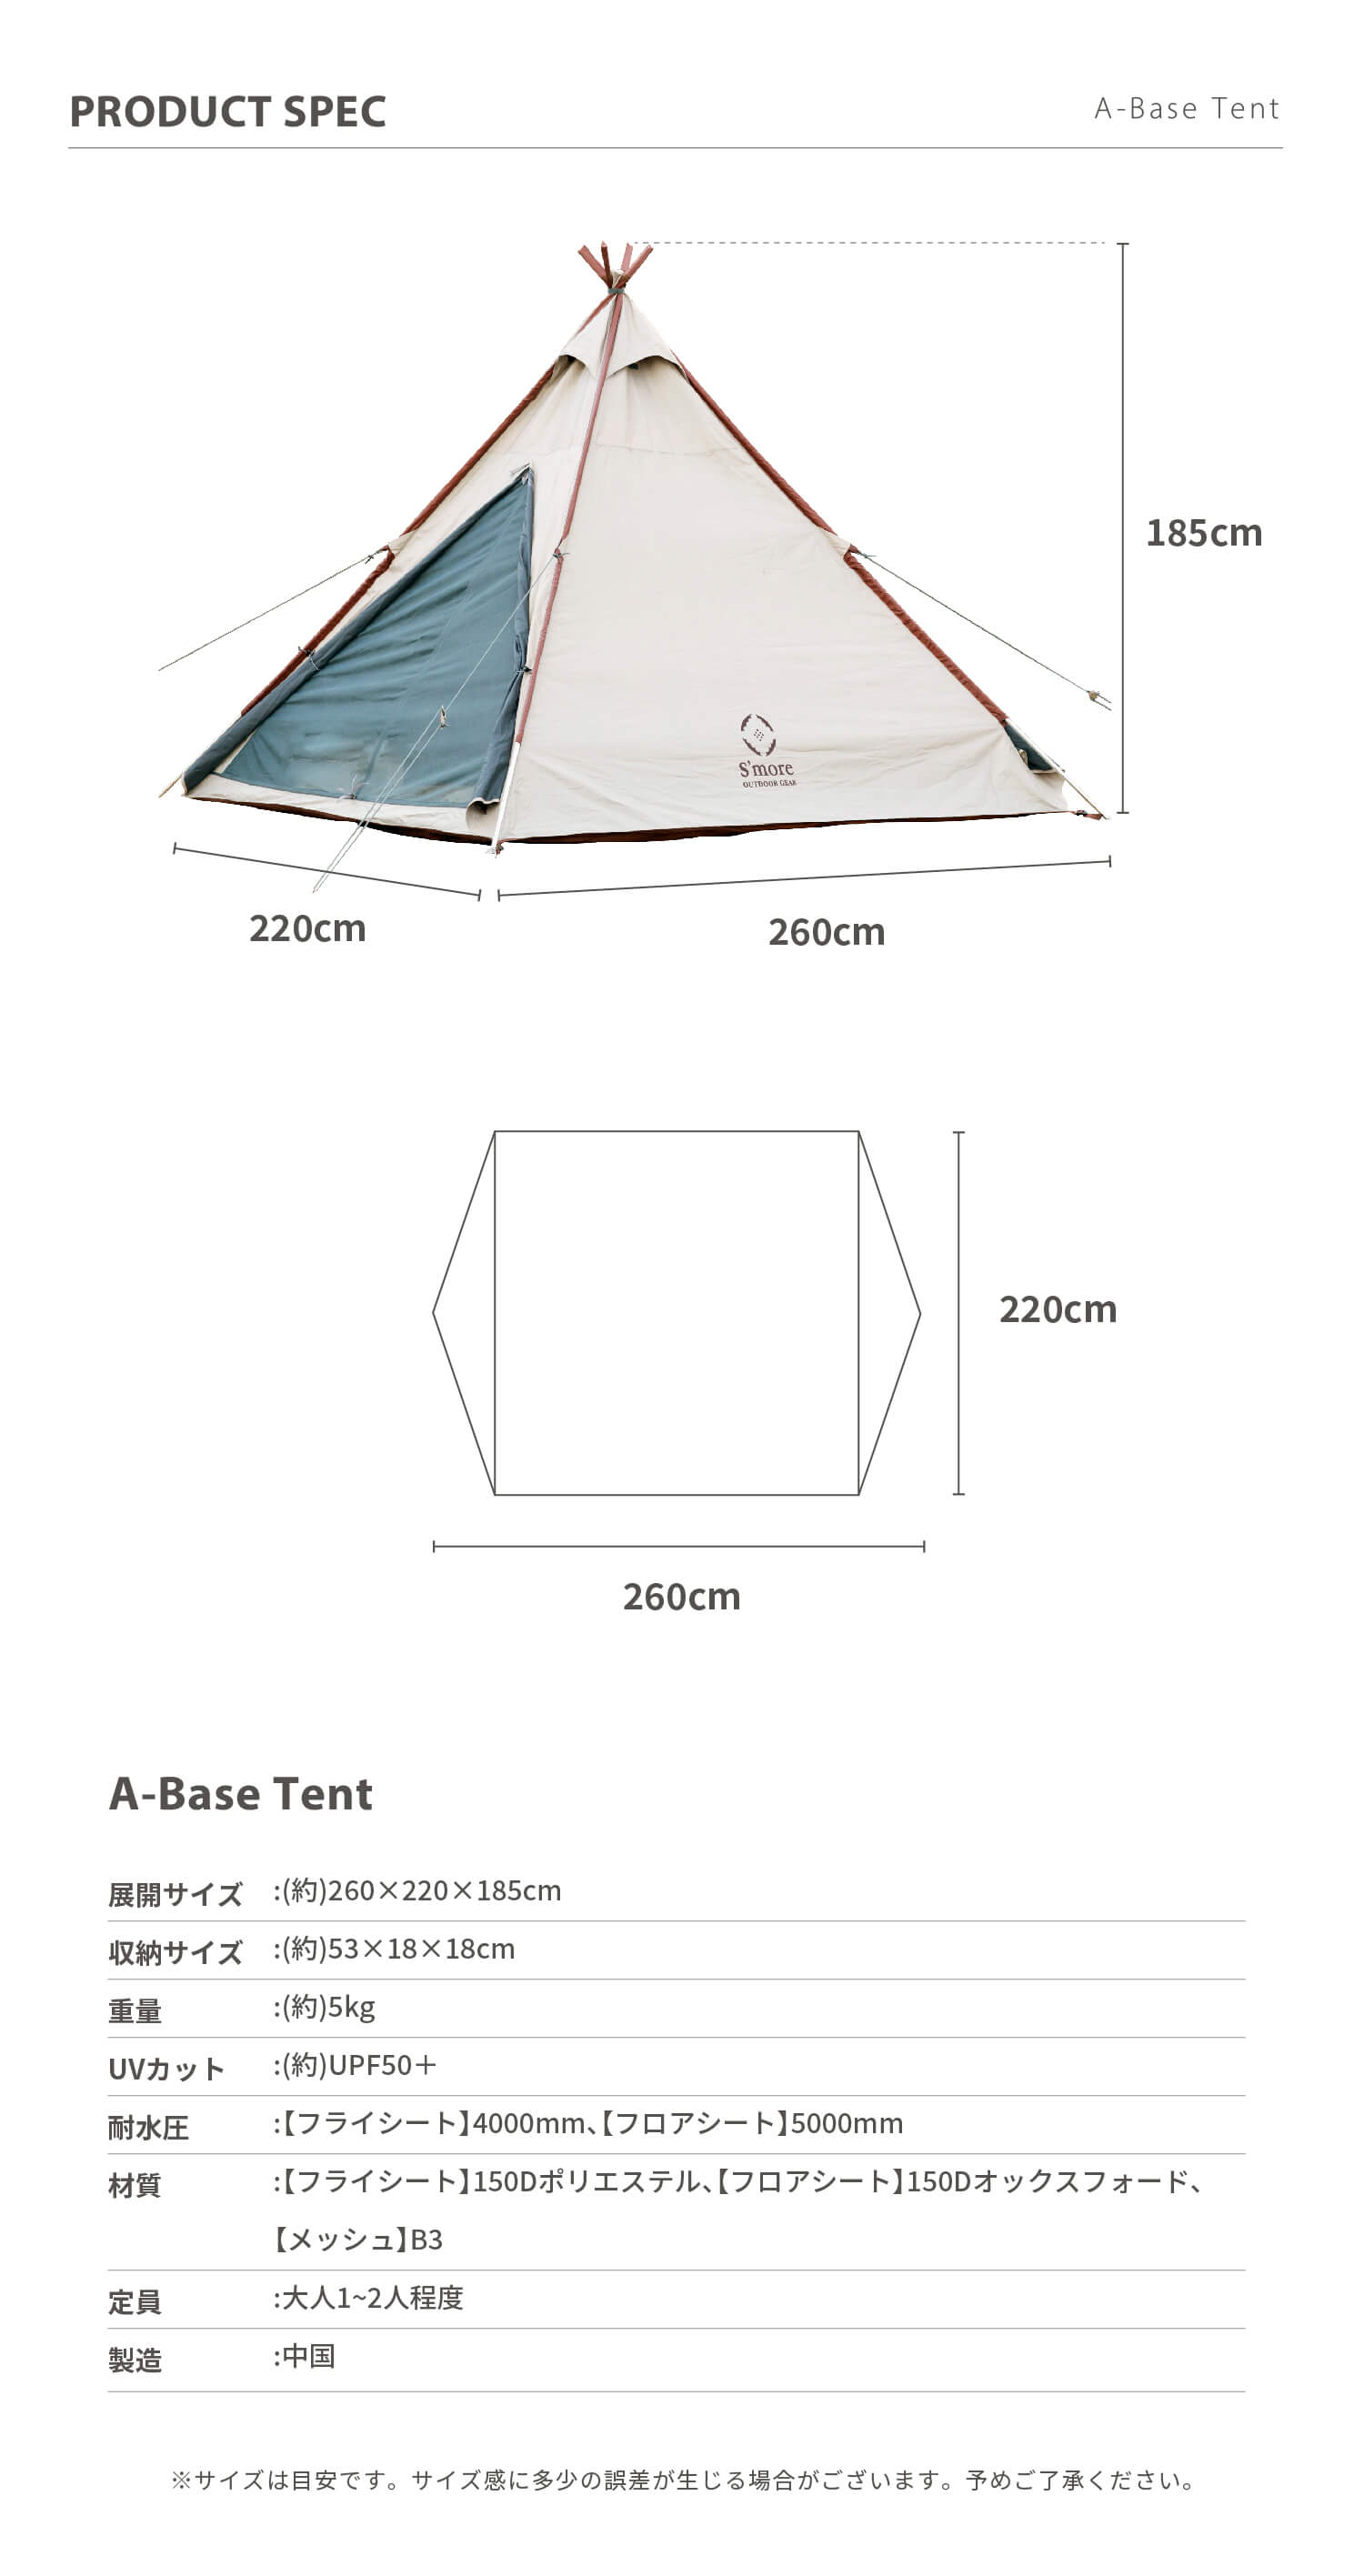 A-Base tent 】 Aベーステント ポリエステルテント ソロテント